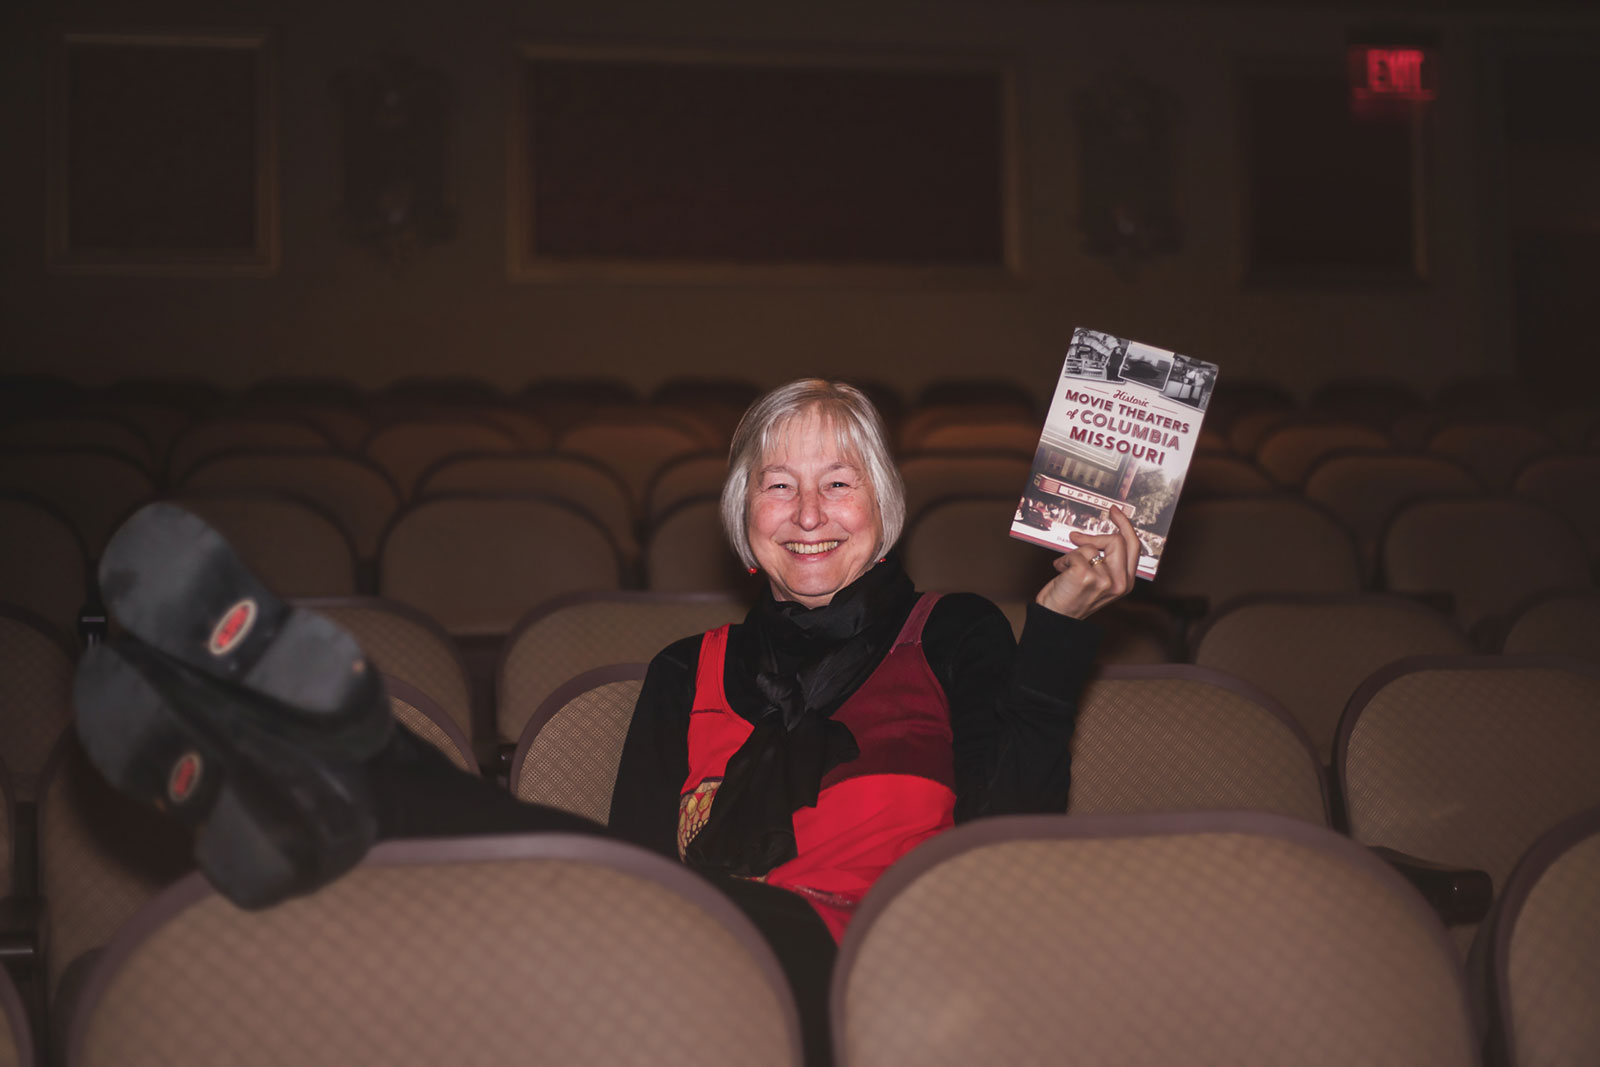 Dianna Borsi O’Brien holding her book, Historic Movie Theaters of Columbia, Missouri